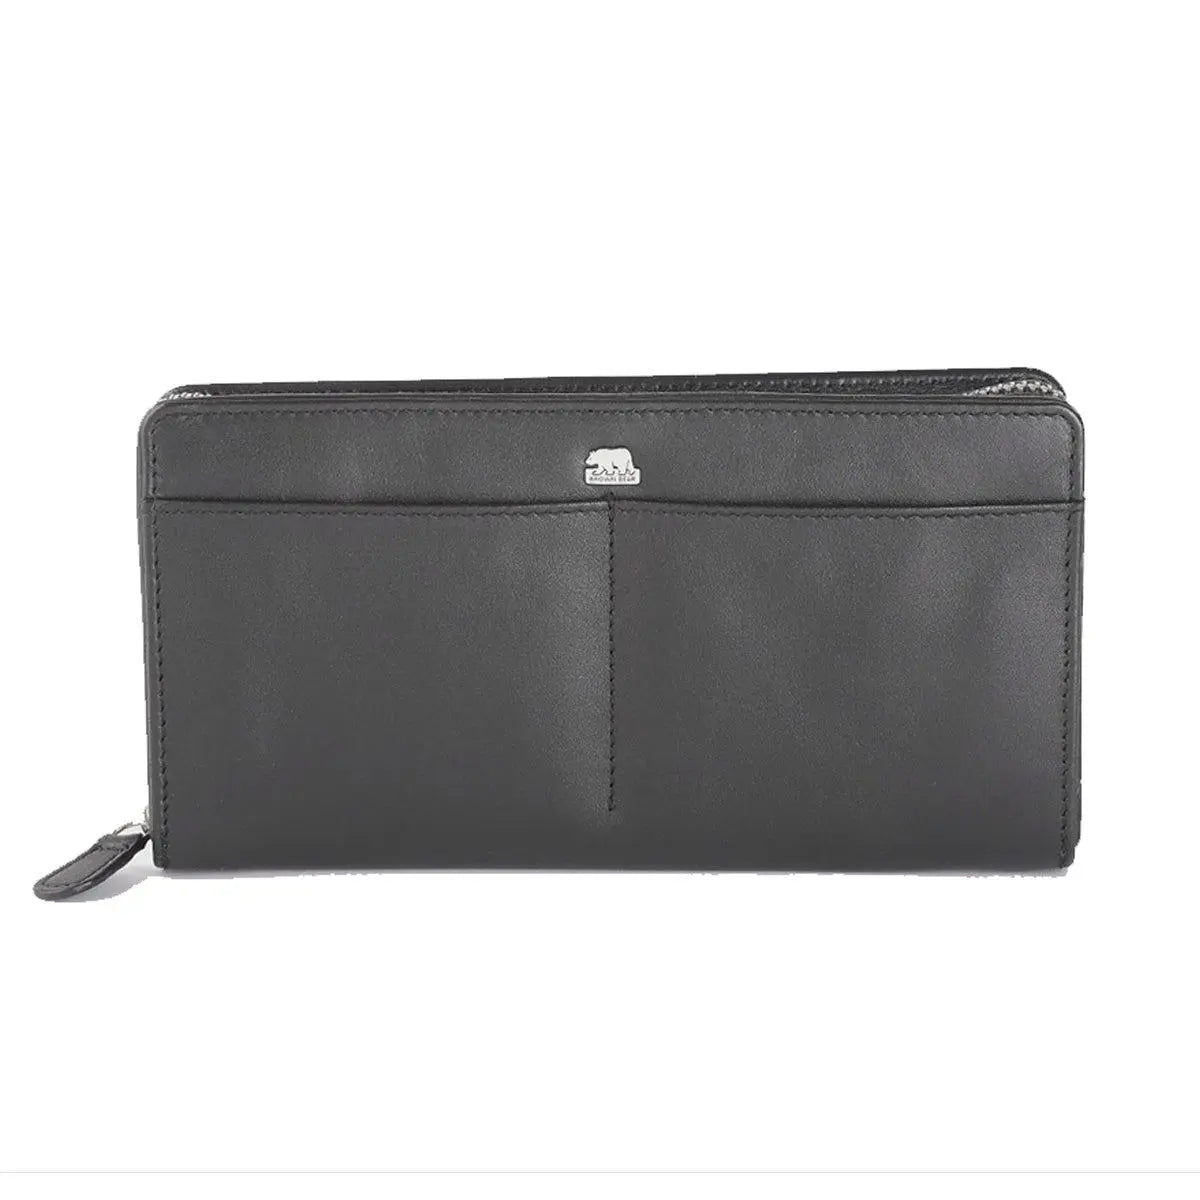 Buy/Send Genuine Leather Multi Slot Wallet Red Online- FNP